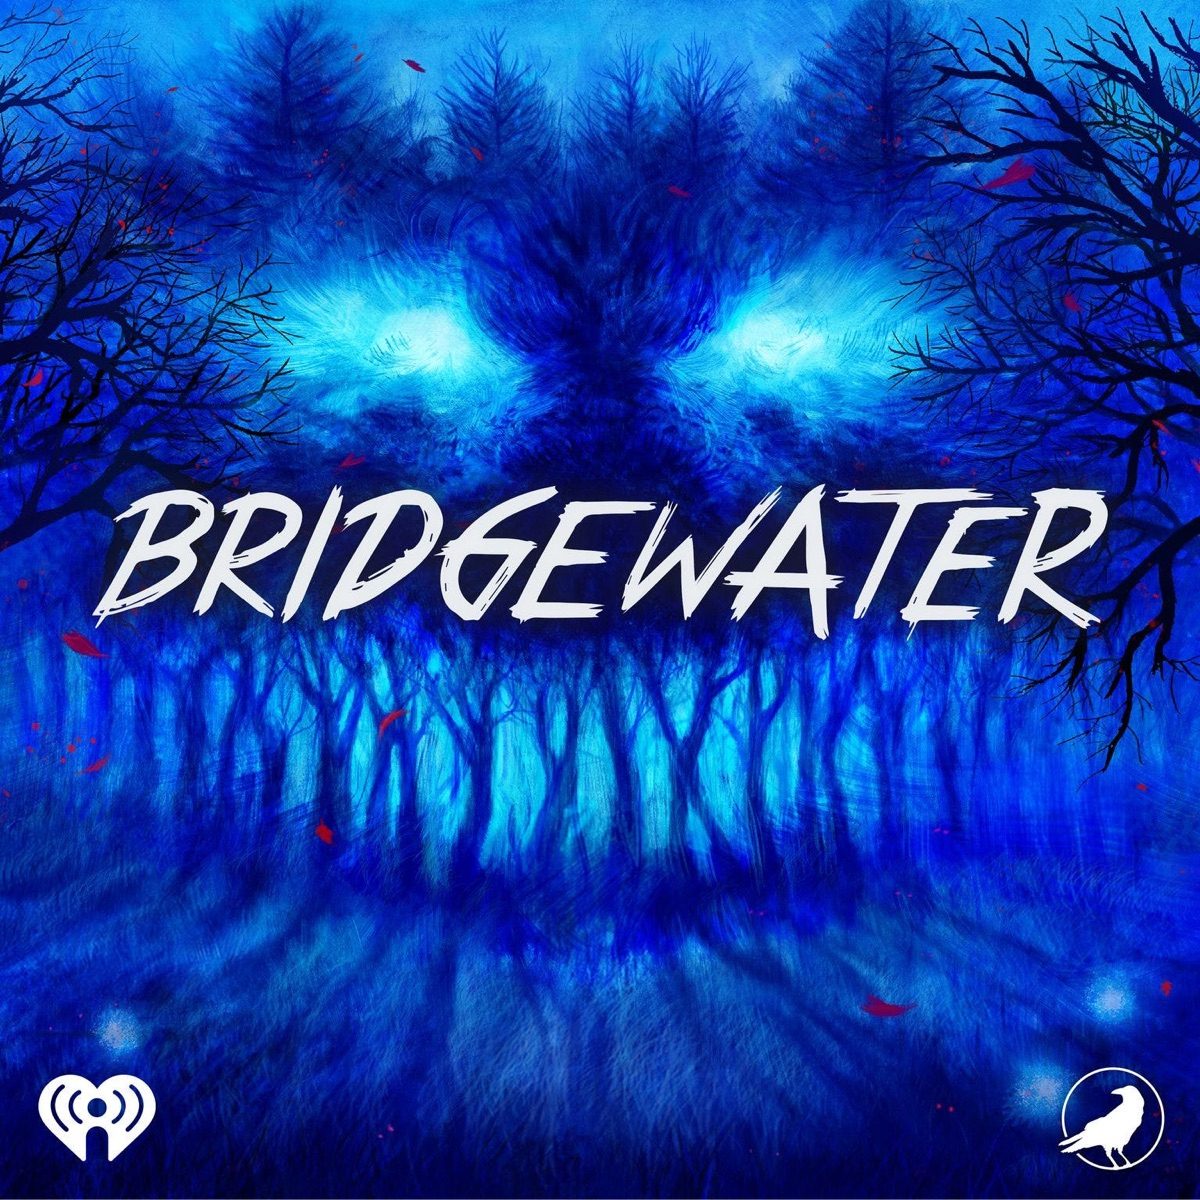 Bridgewater Trailer